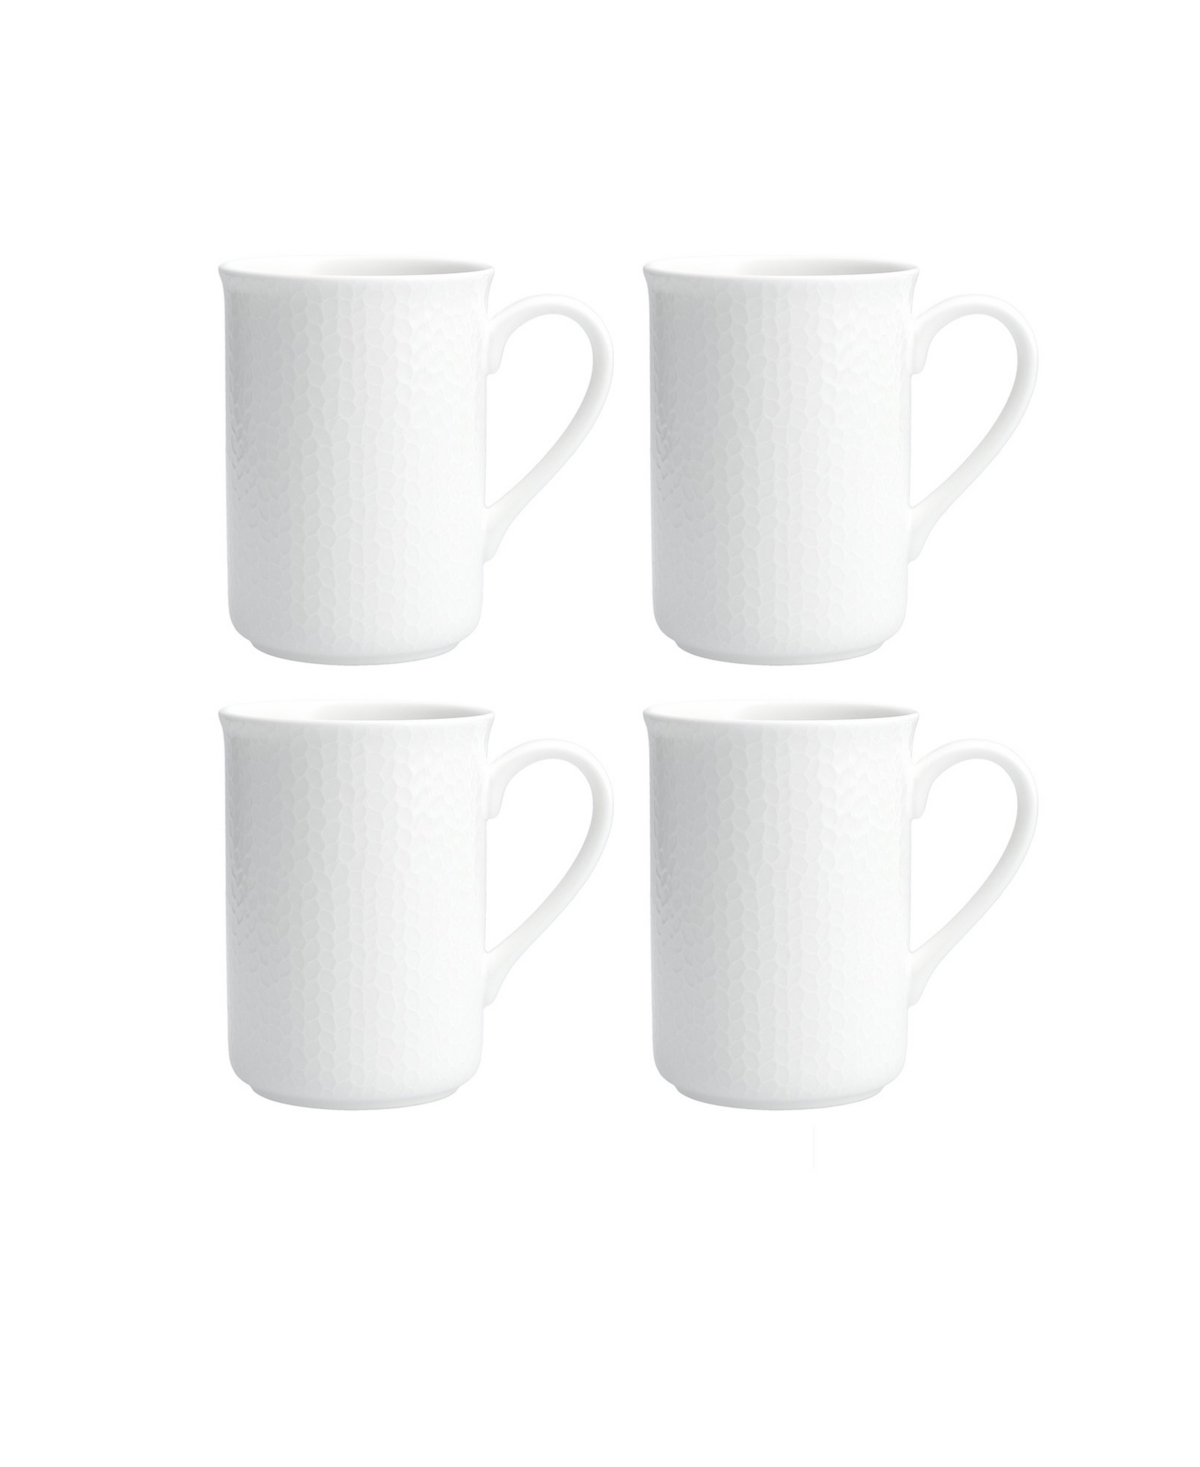 Amanda White Embossed Mugs, Set of 4 - White